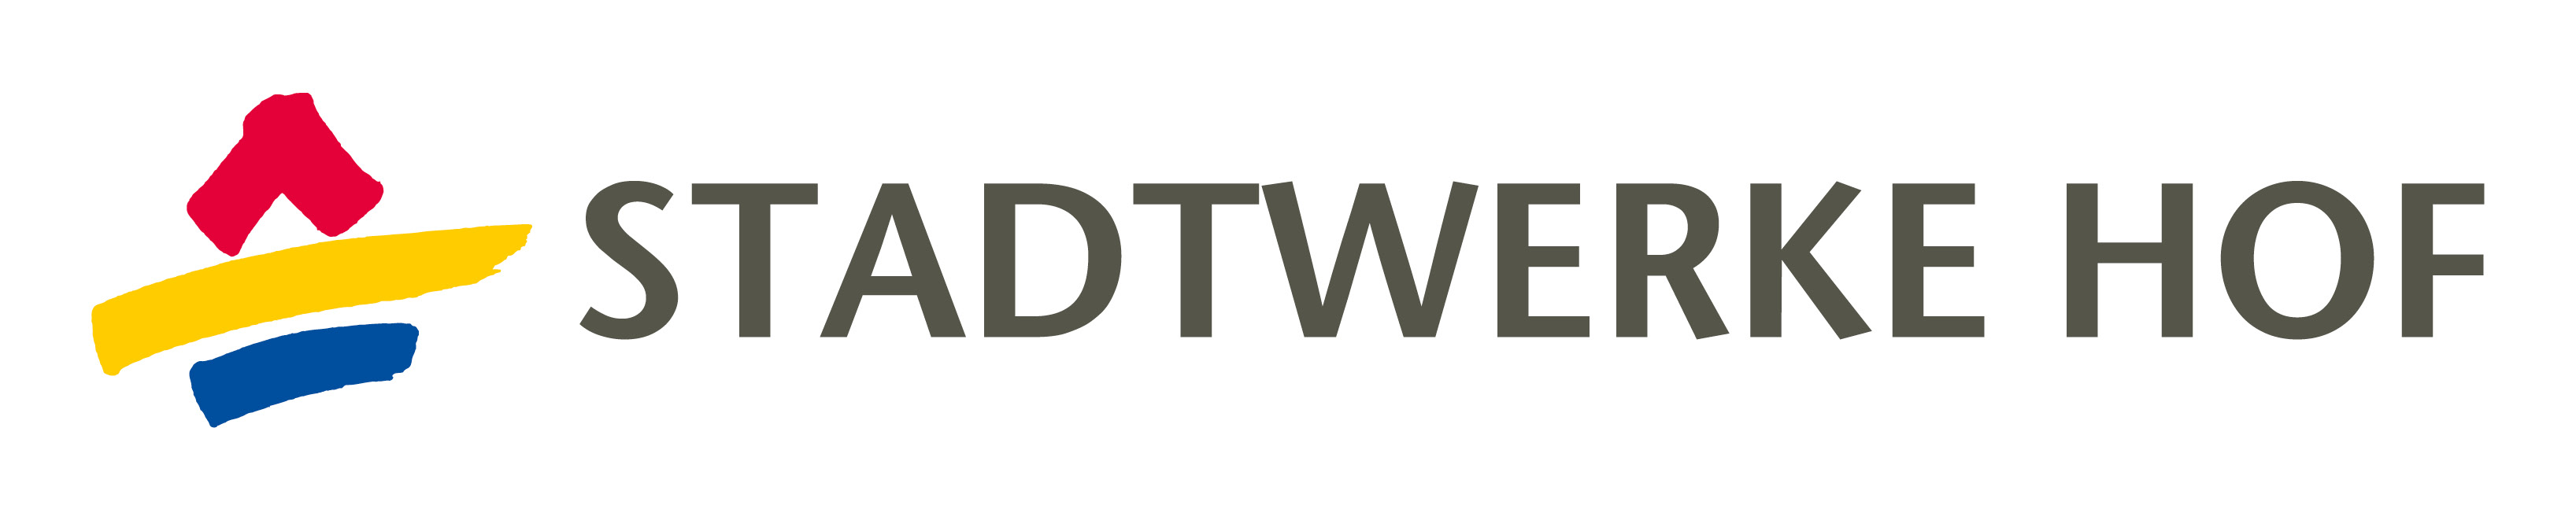 Grafik: Logo Stadtwerke Hof einzeilig